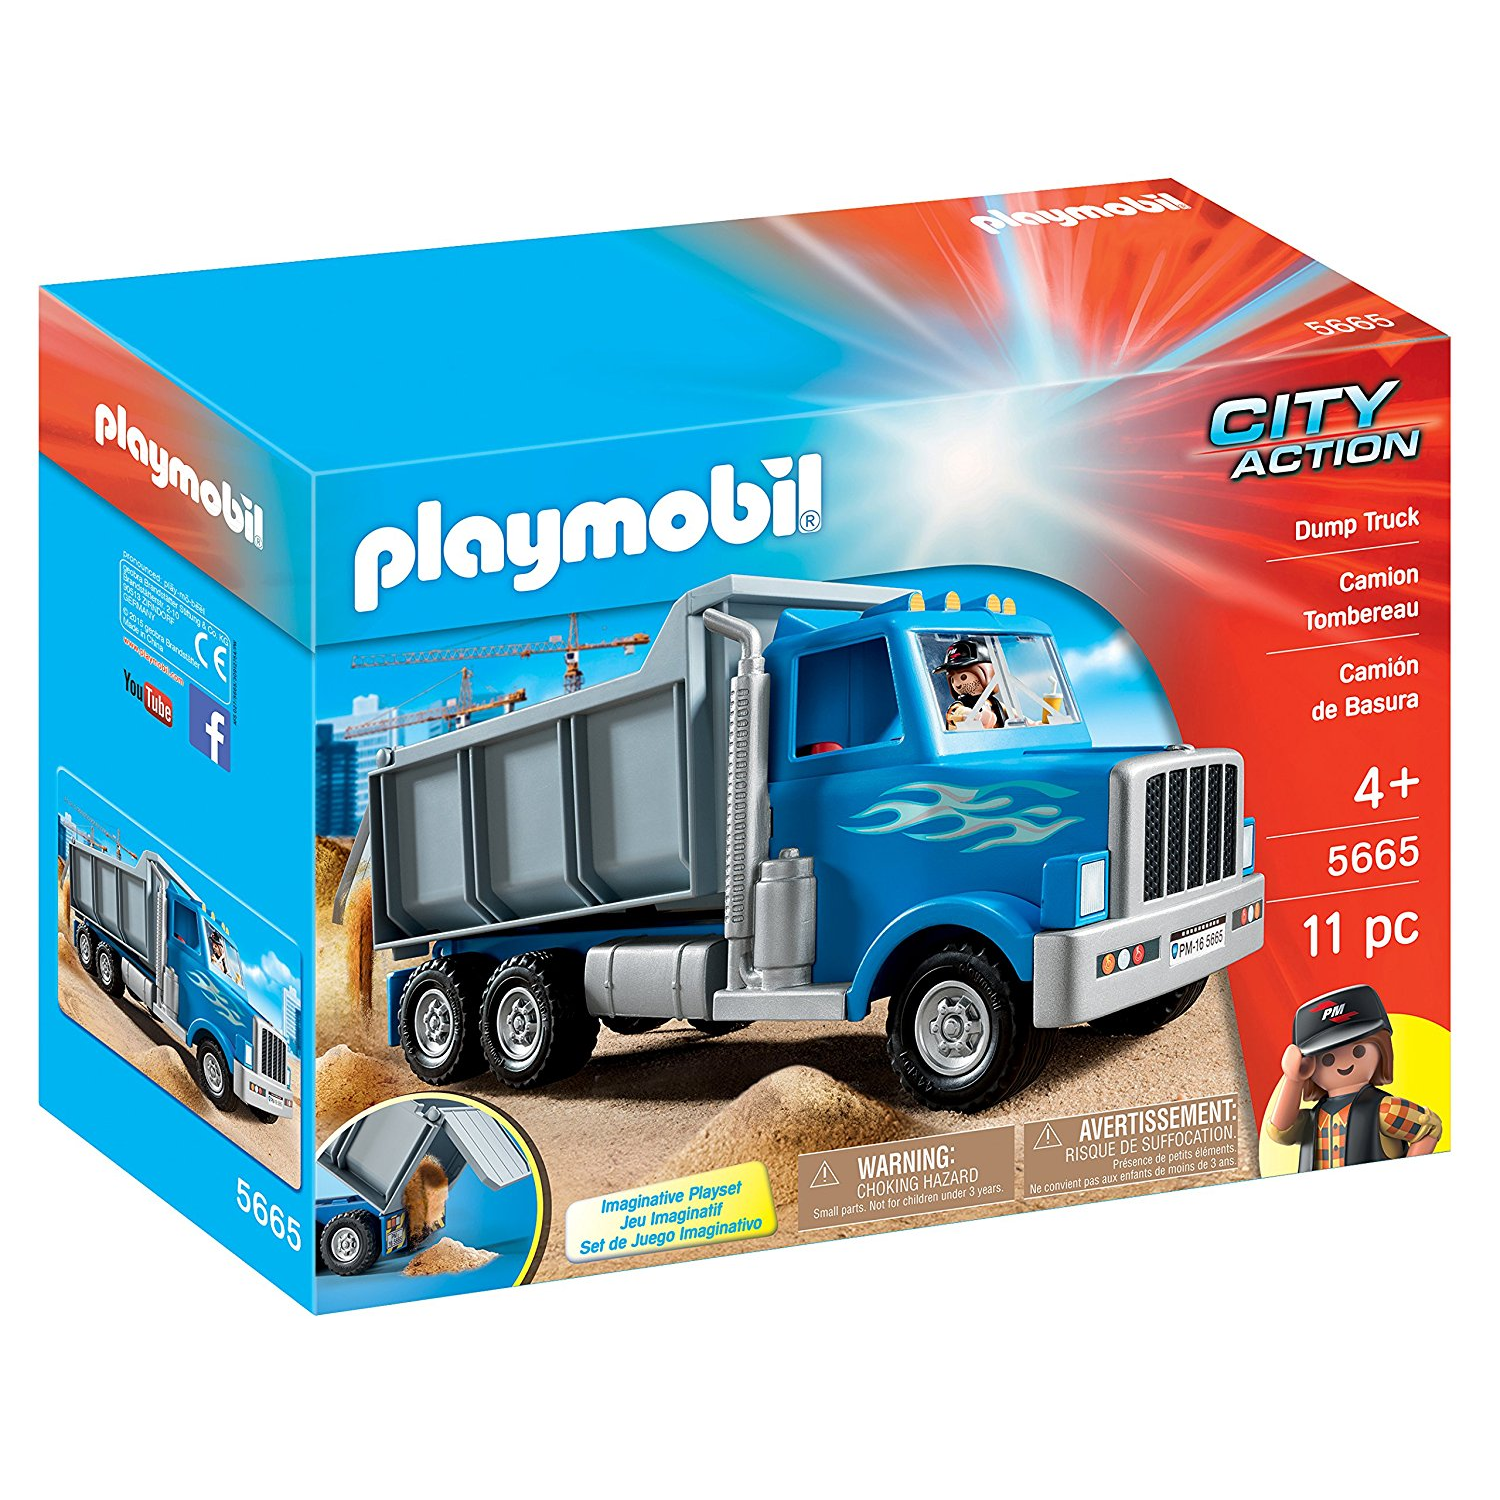 PLAYMOBIL Dump Truck Playset Only $14.99! (Reg $24.99)